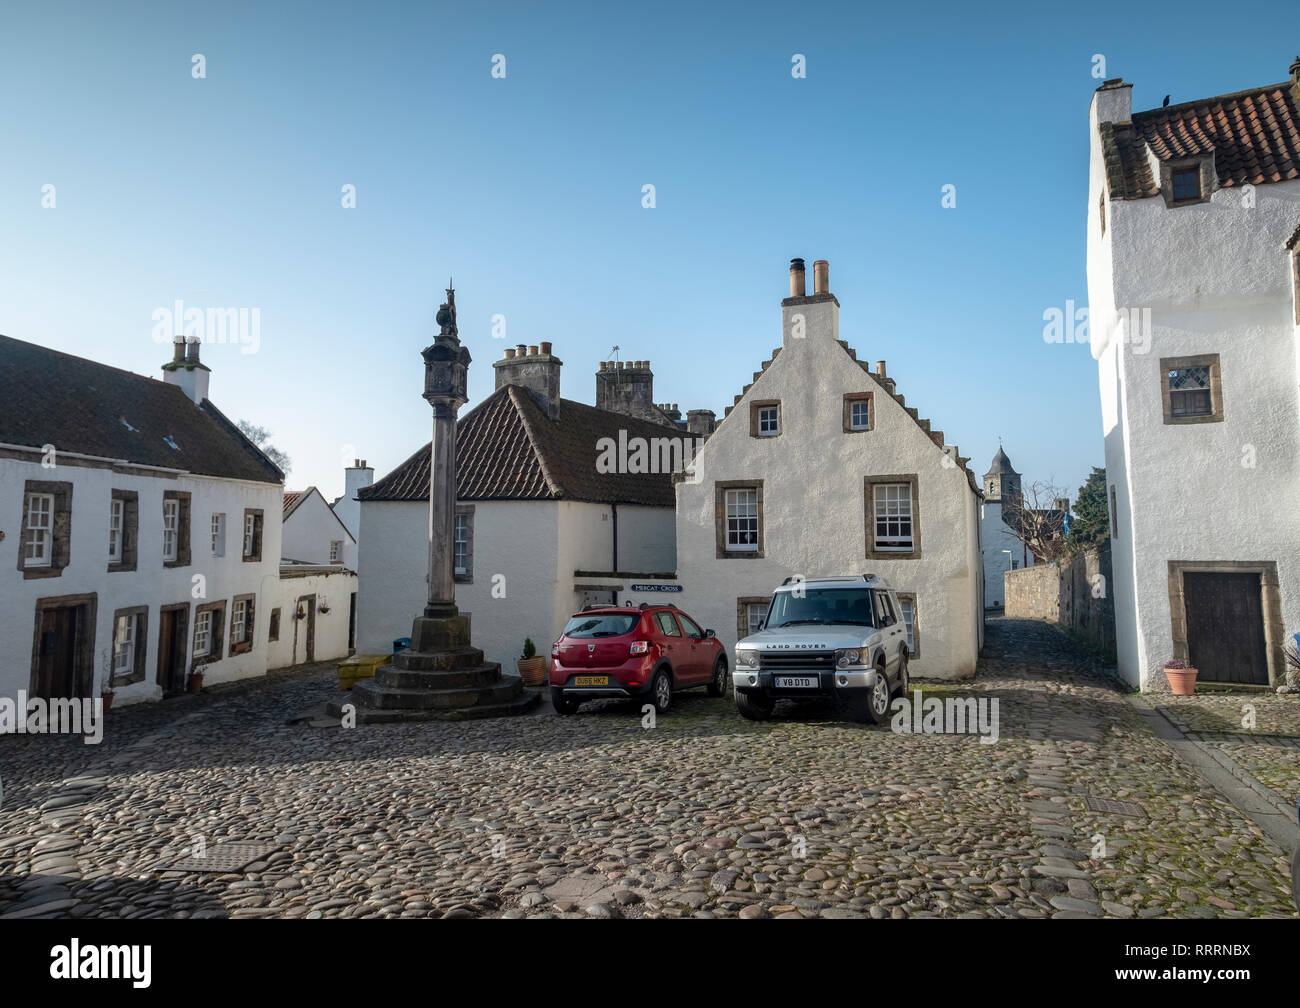 The Mercat Cross in a historic village of Culross, Fife, Scotland. Stock Photo